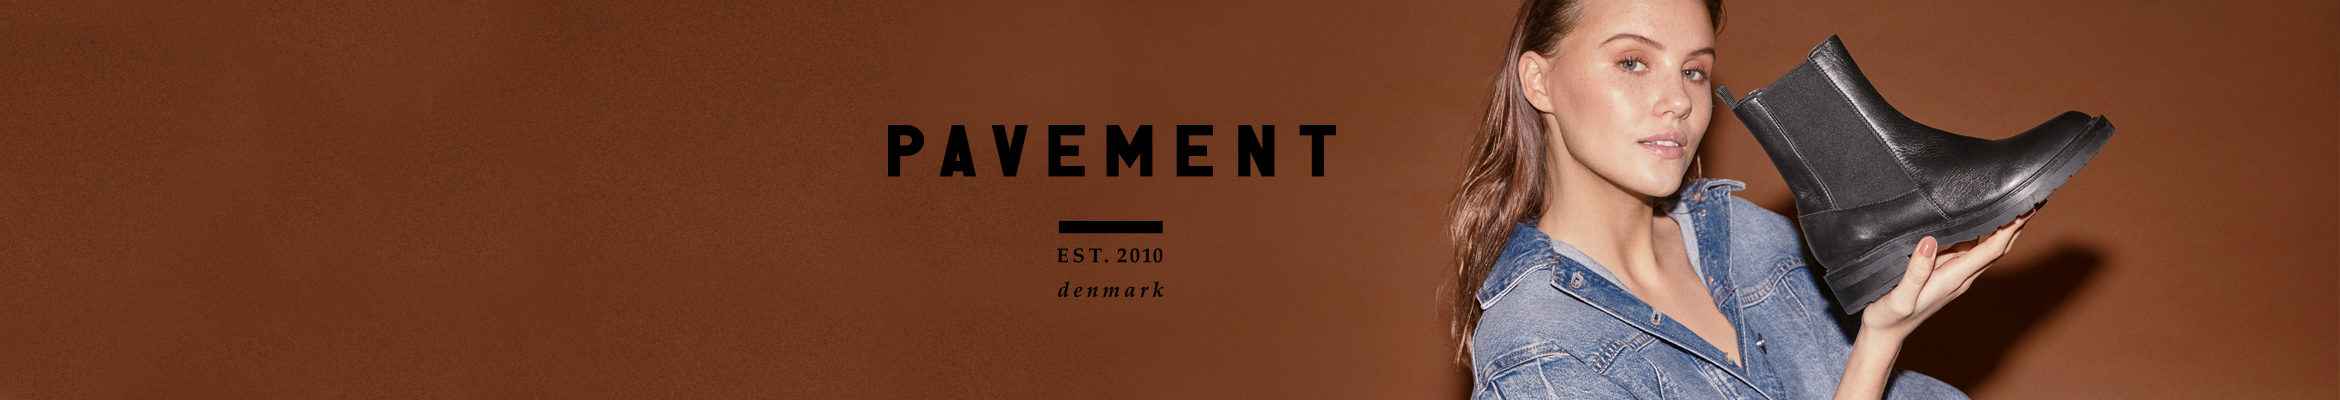 Pavement | Trendy women's fashion | Boozt.com